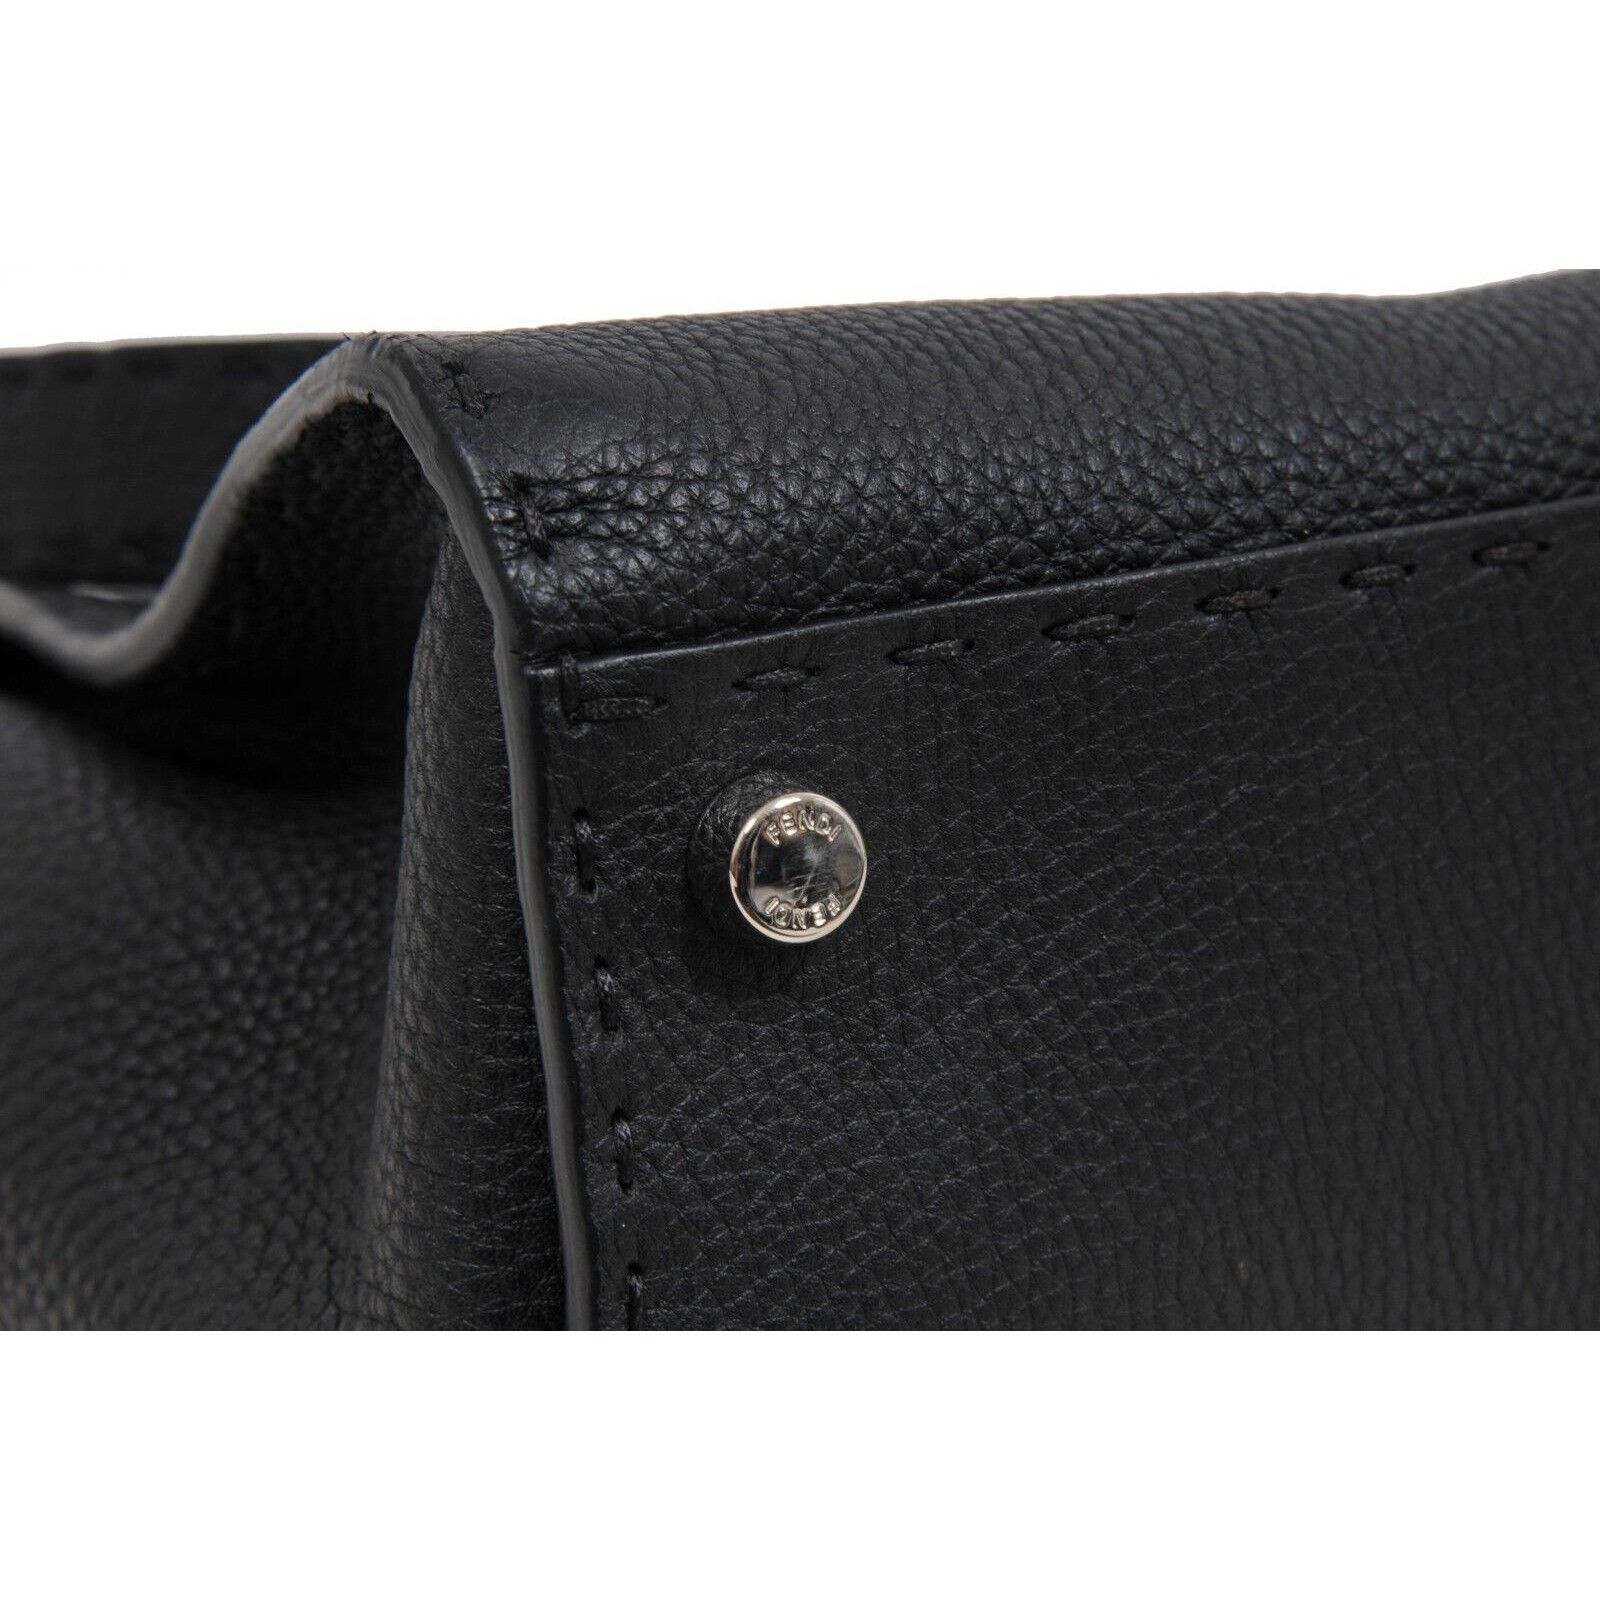 Fendi Peekaboo Satchel Tote Large Black Leather Shoulder Bag Size ONE SIZE - 6 Thumbnail